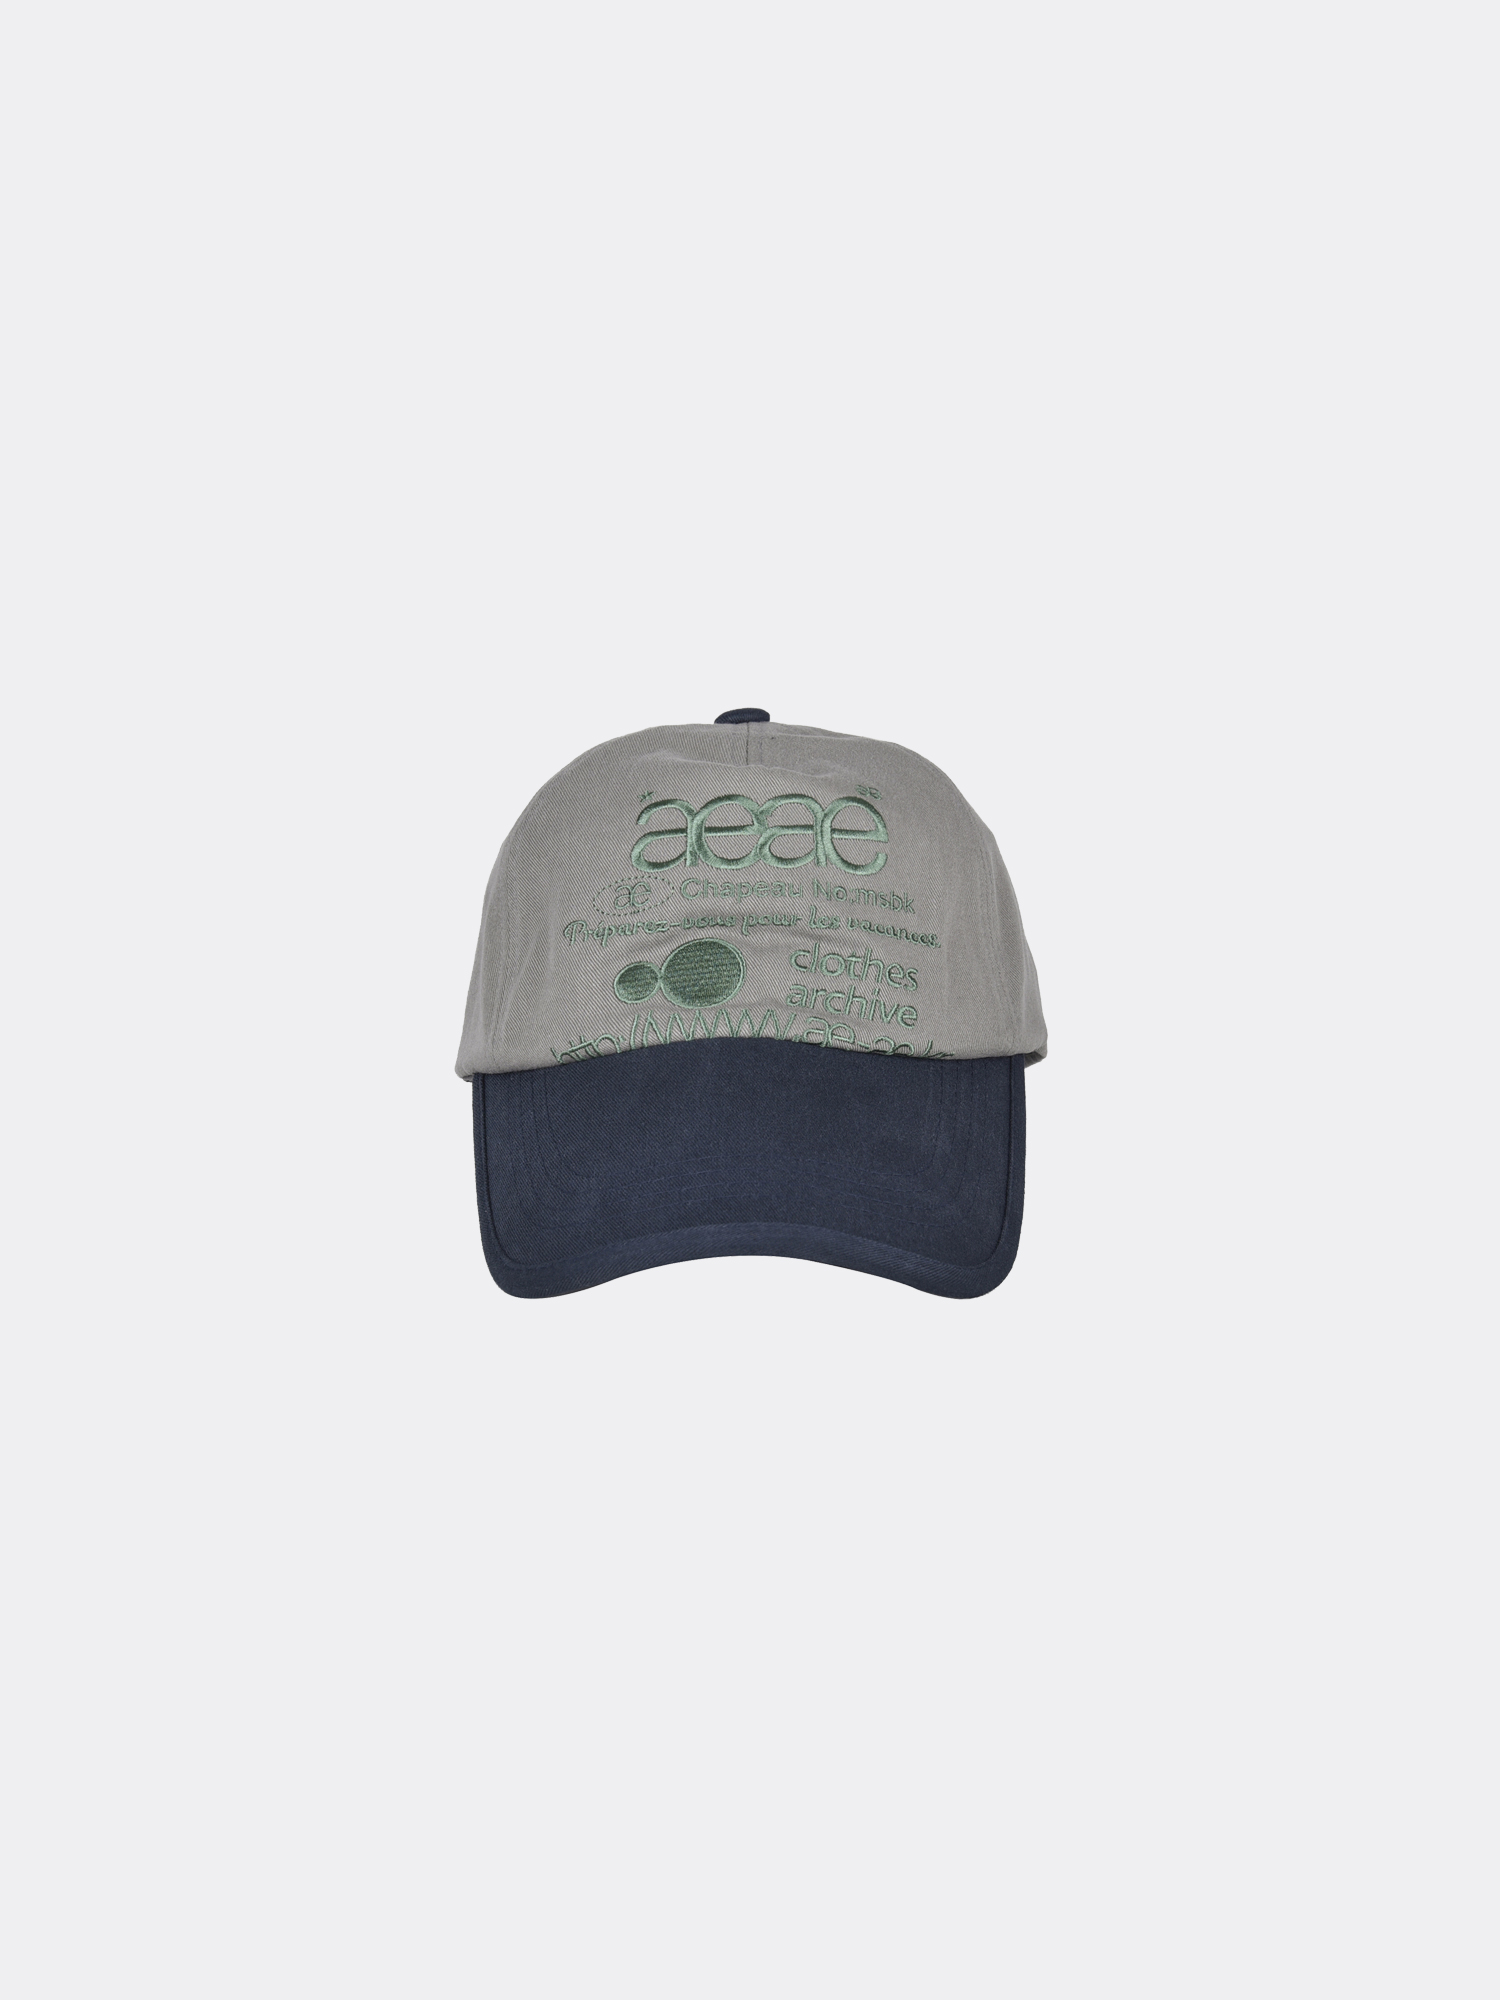 aeae WEB LOGO 5 PANNEL BALL CAP-GREY/NAVY